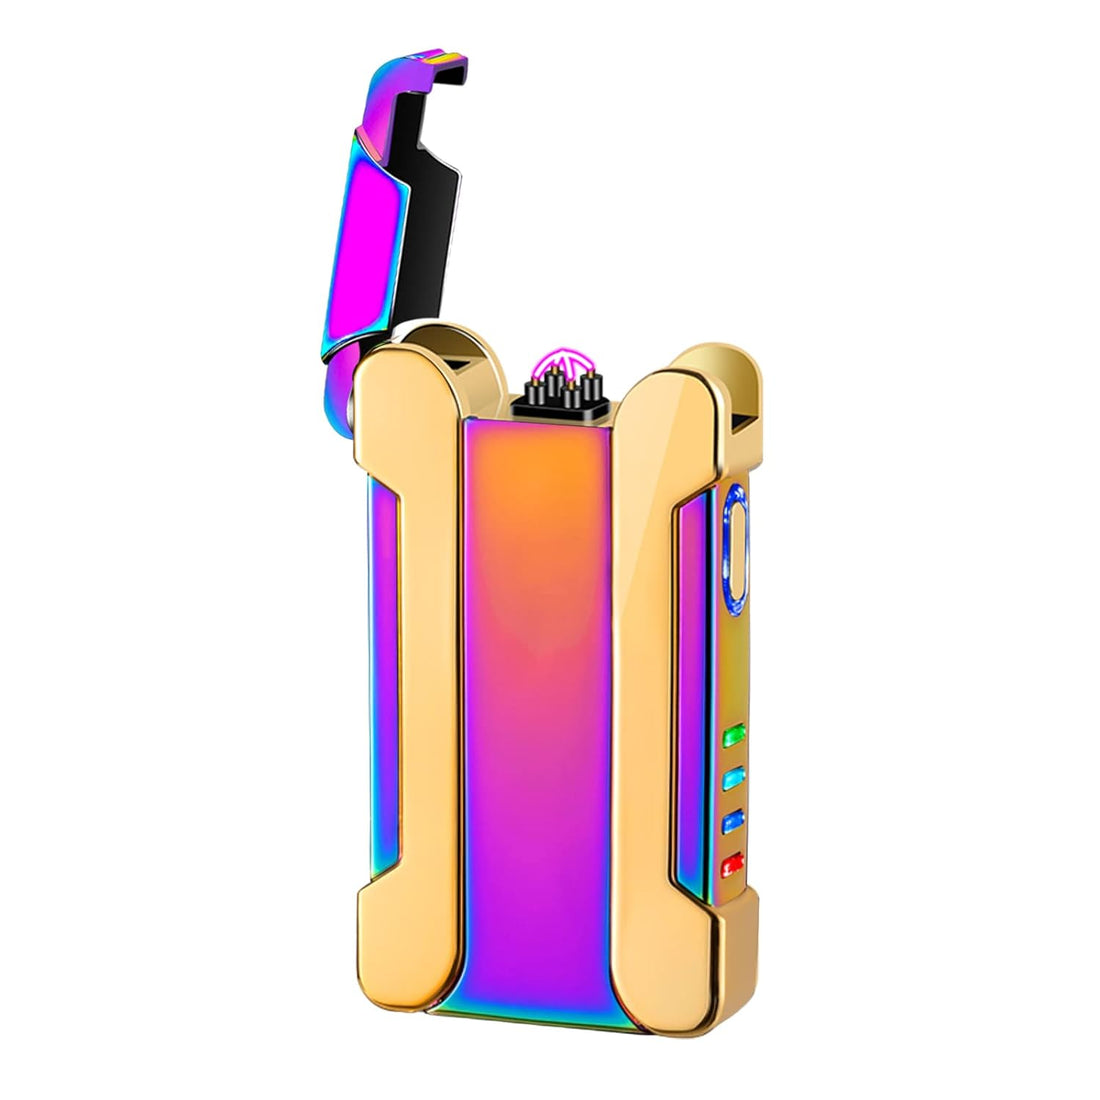 BABOBIU Plasma Lighter Arc Lighter Fast Heat Fast Ignition Windproof Lighter with Dual Plasma Arc for Candles,Incense,Wick,kindling,Grilling (Colorful)